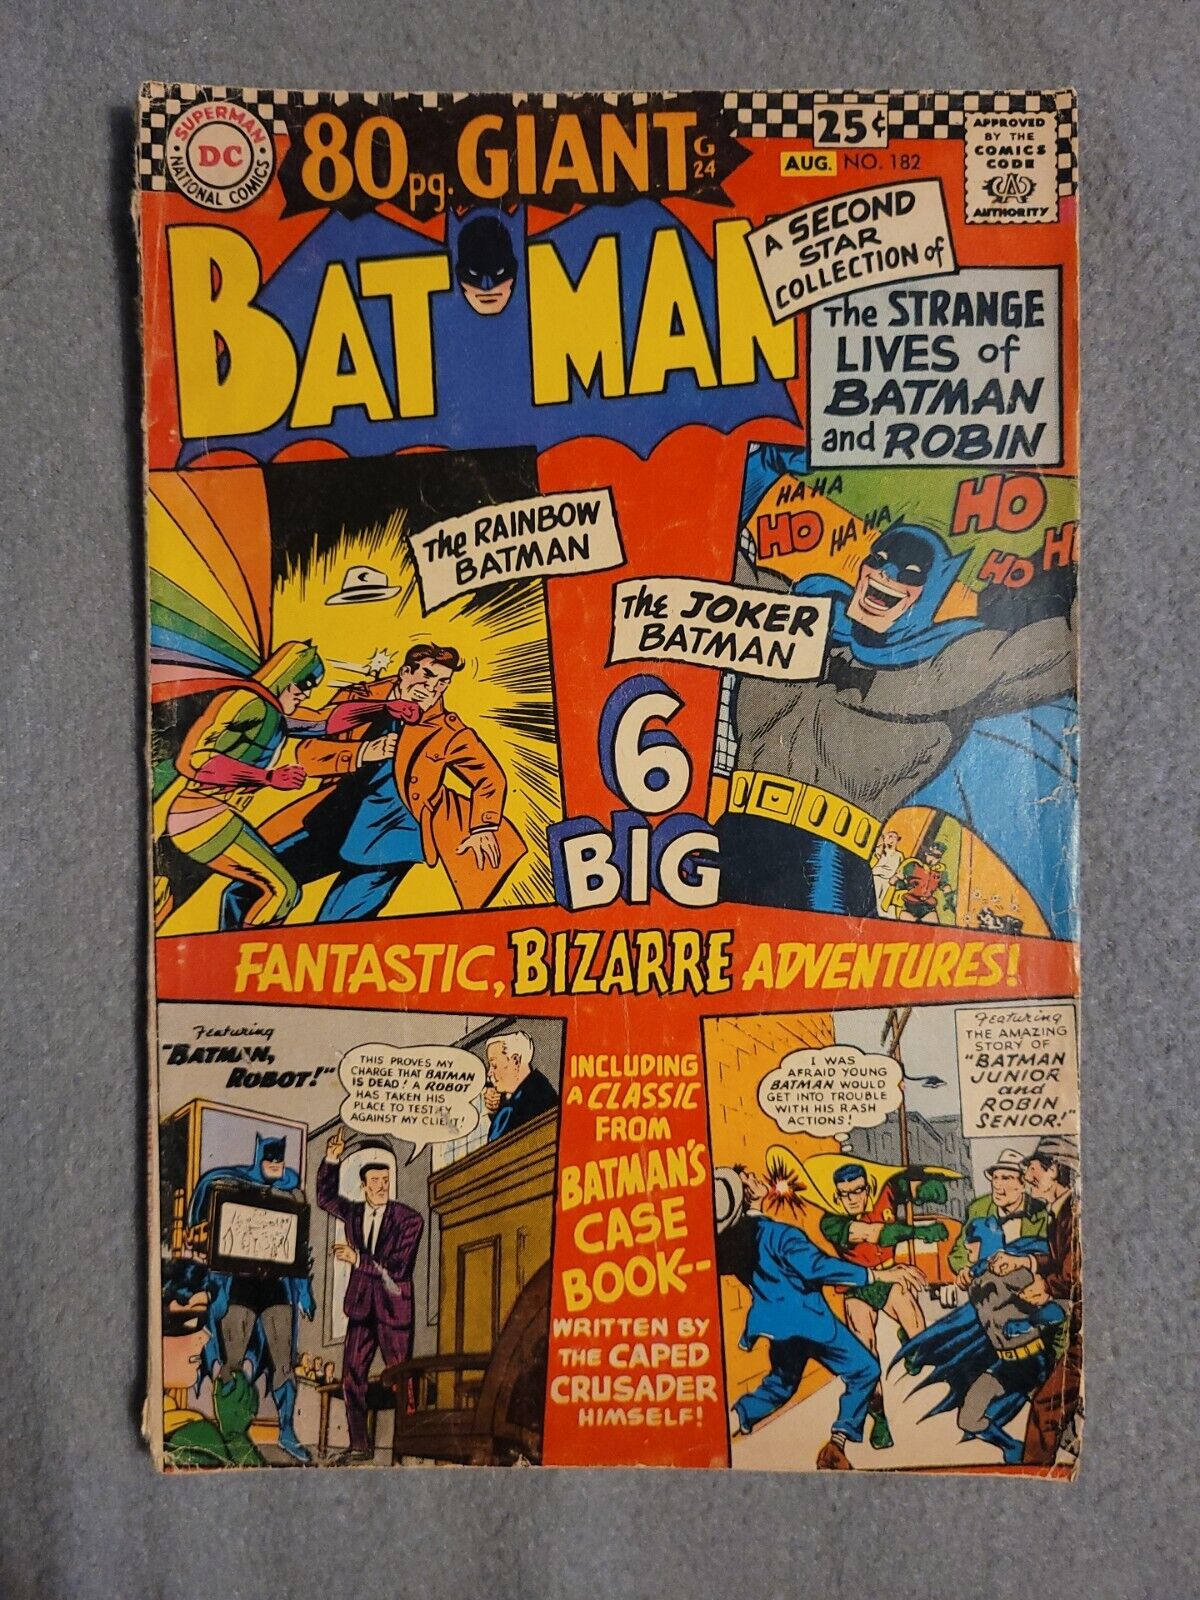 BATMAN #182 (80 pg. GIANT G-24) FINE+ Joker, Squarebound book